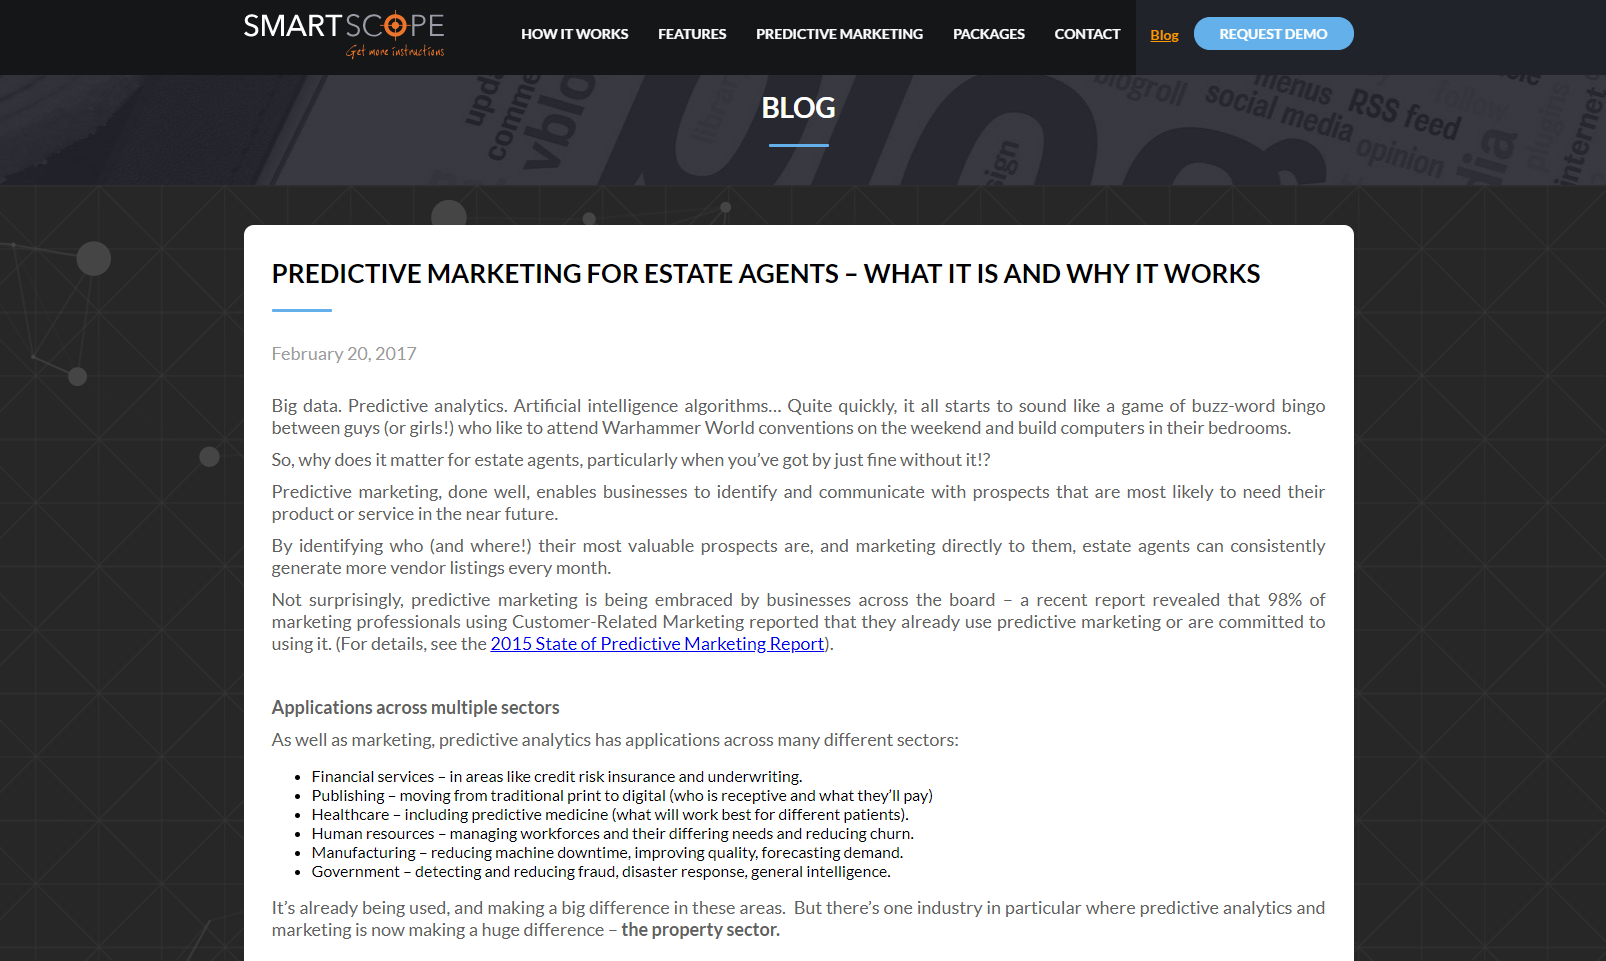 SmartScope predictive marketing blog post copy